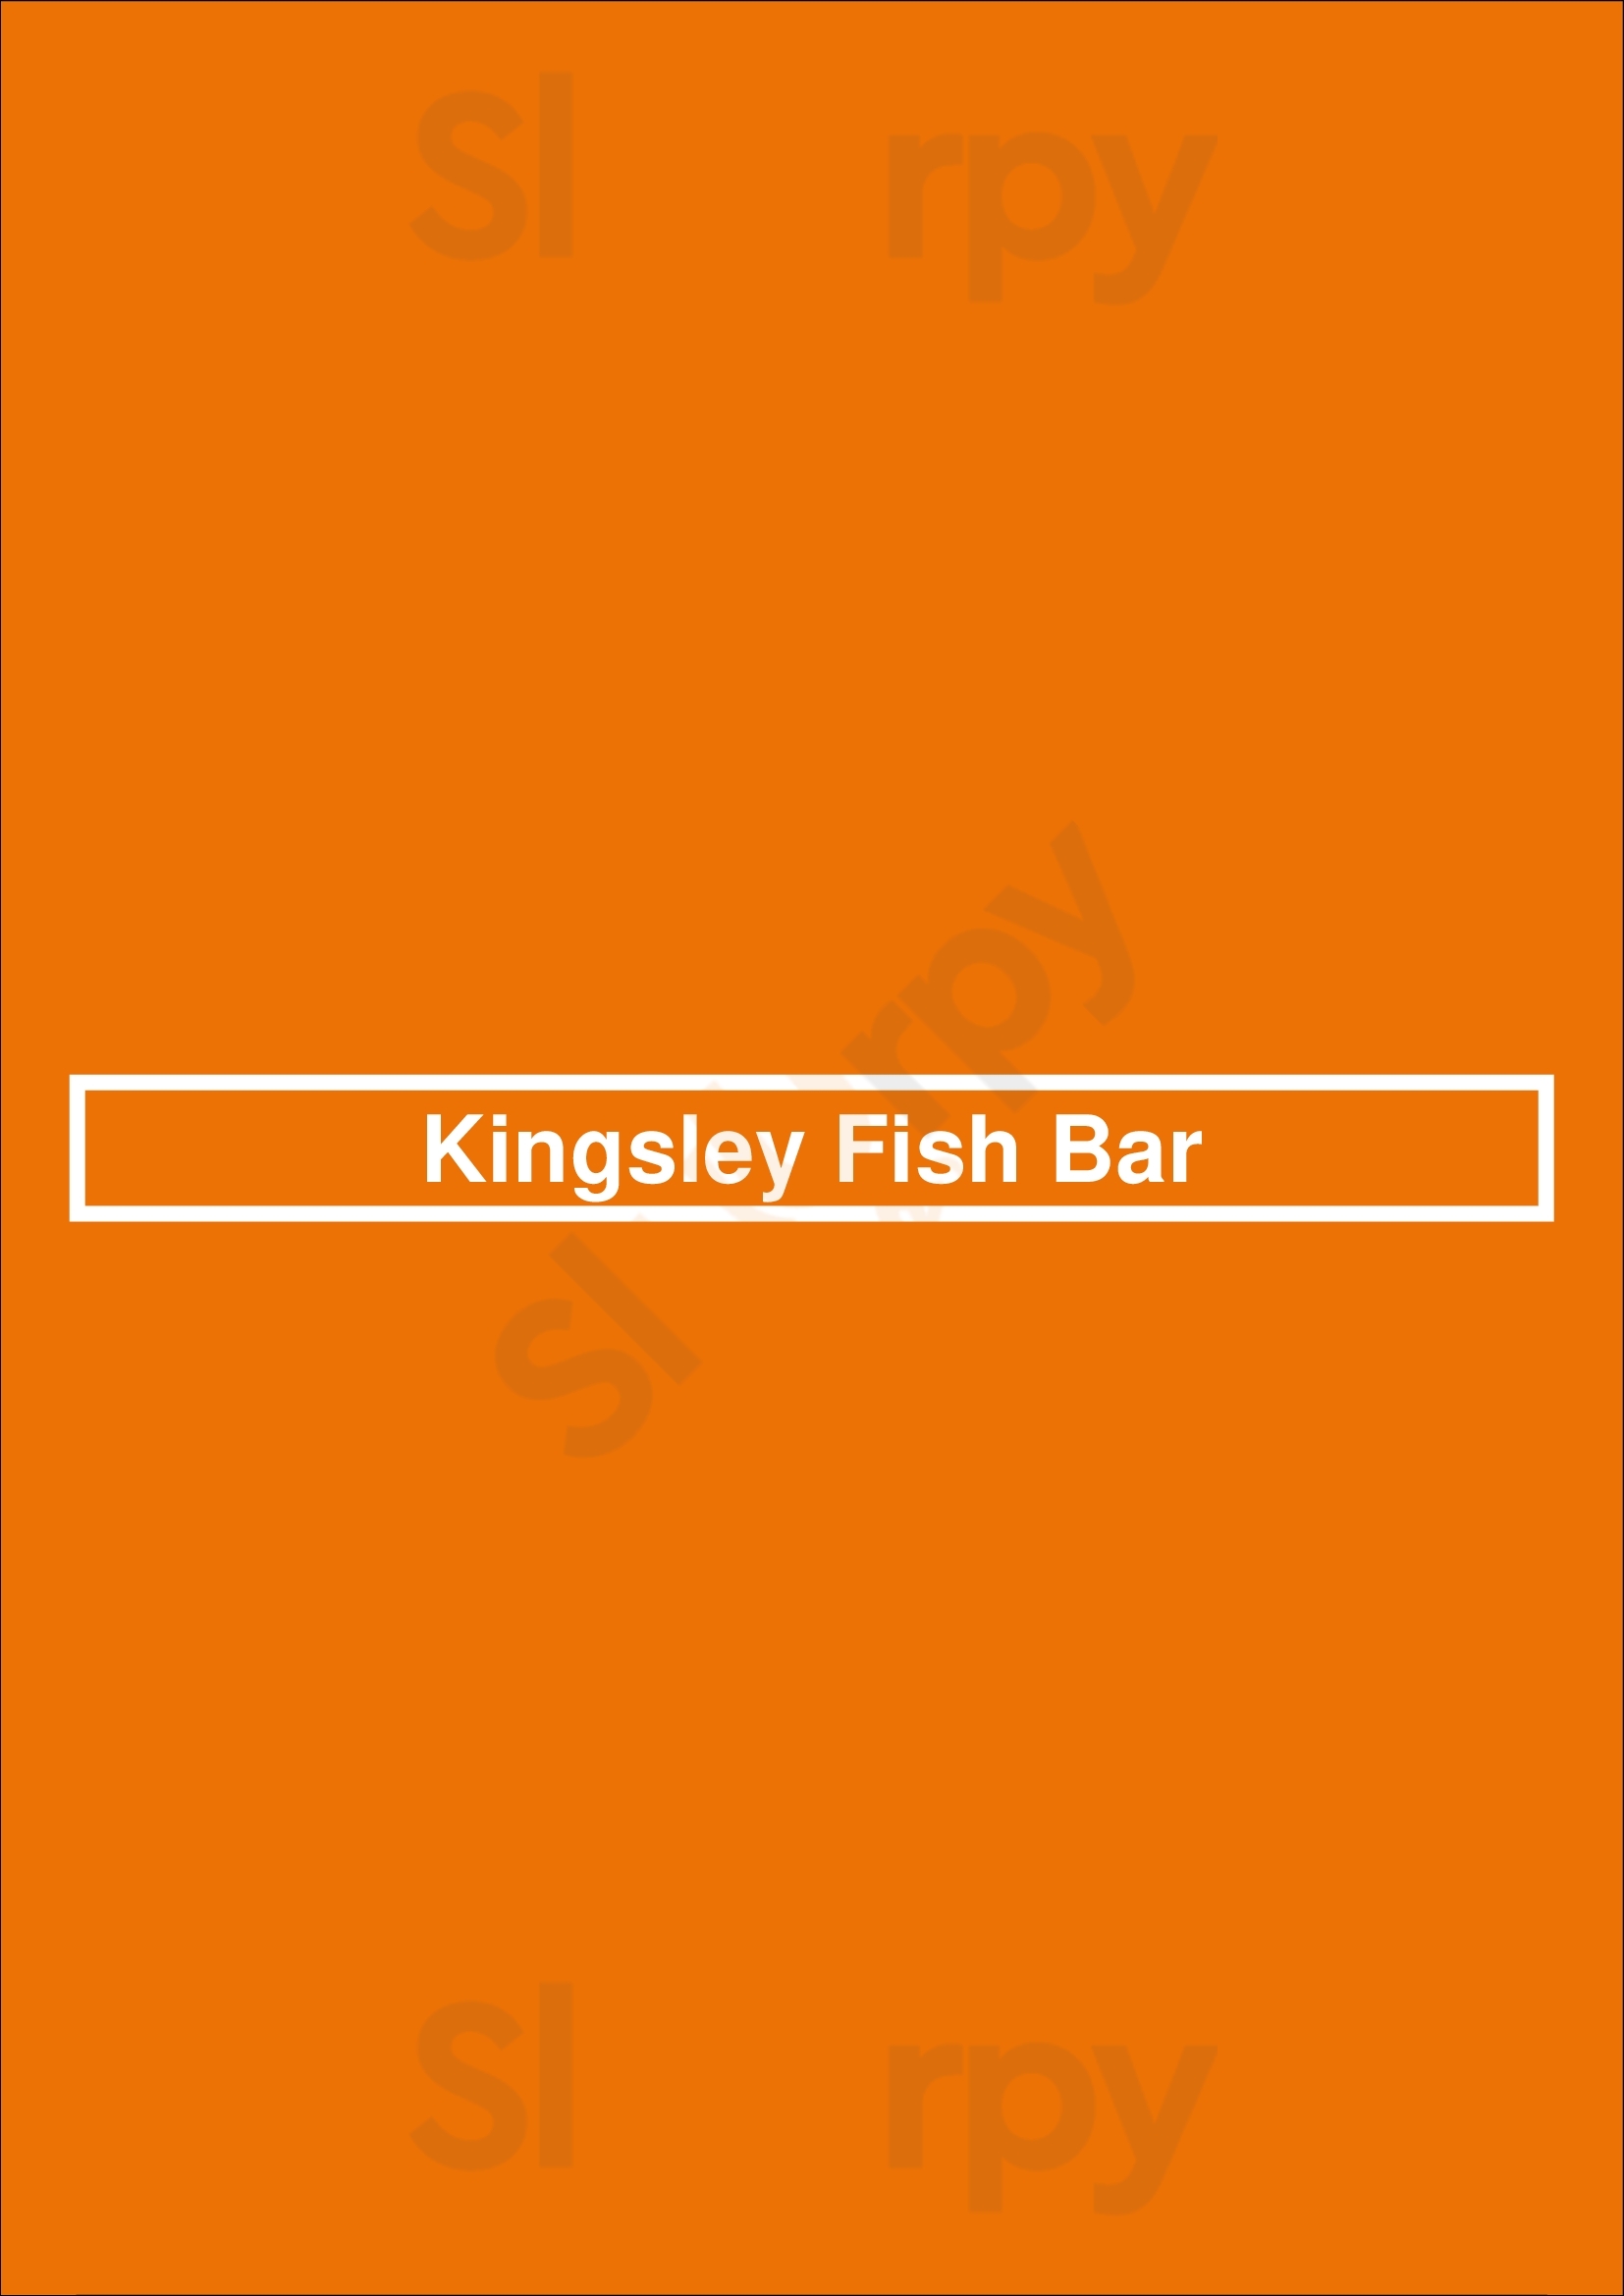 Kingsley Fish Bar Wrexham Menu - 1